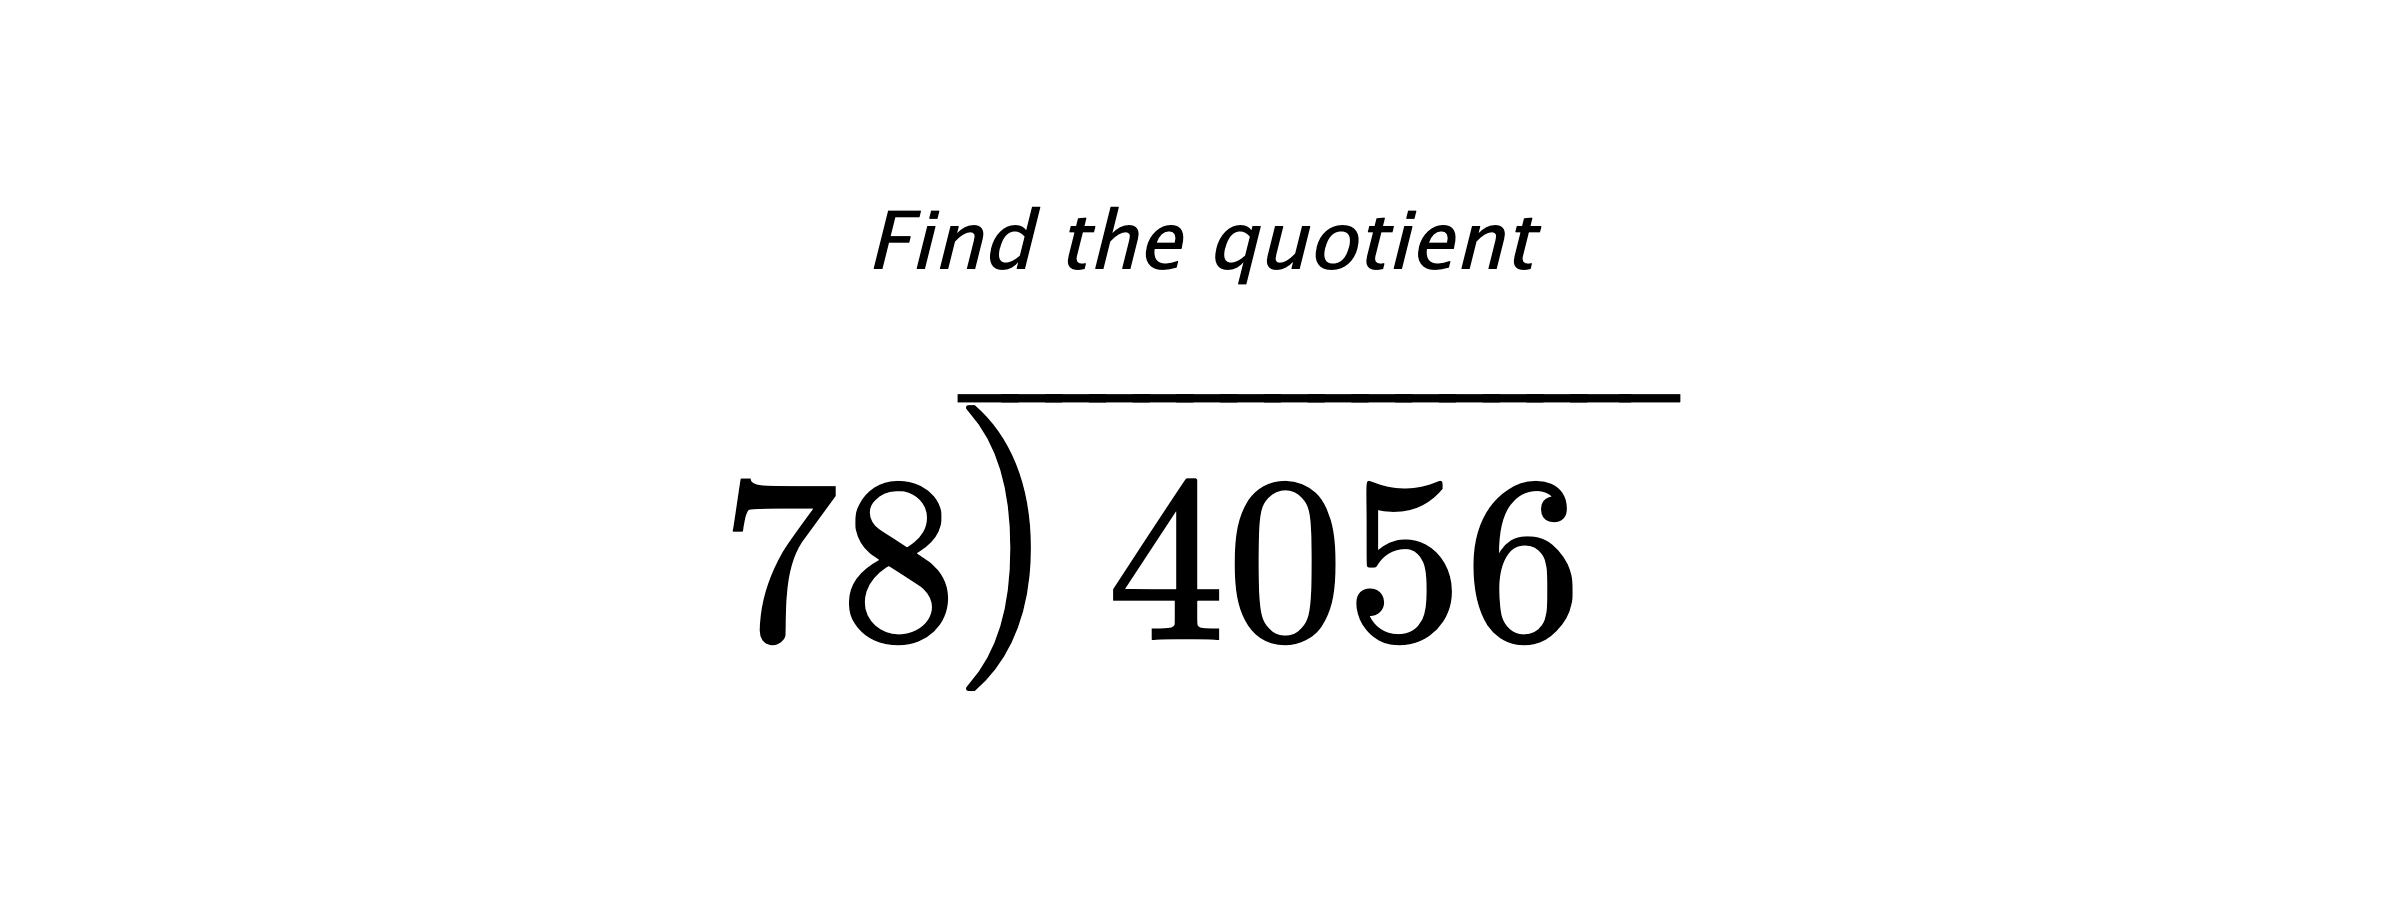 Find the quotient $ 78{\overline{\smash{\raise.3ex\hbox{$\big)$}}\,4056\phantom{)}}} $